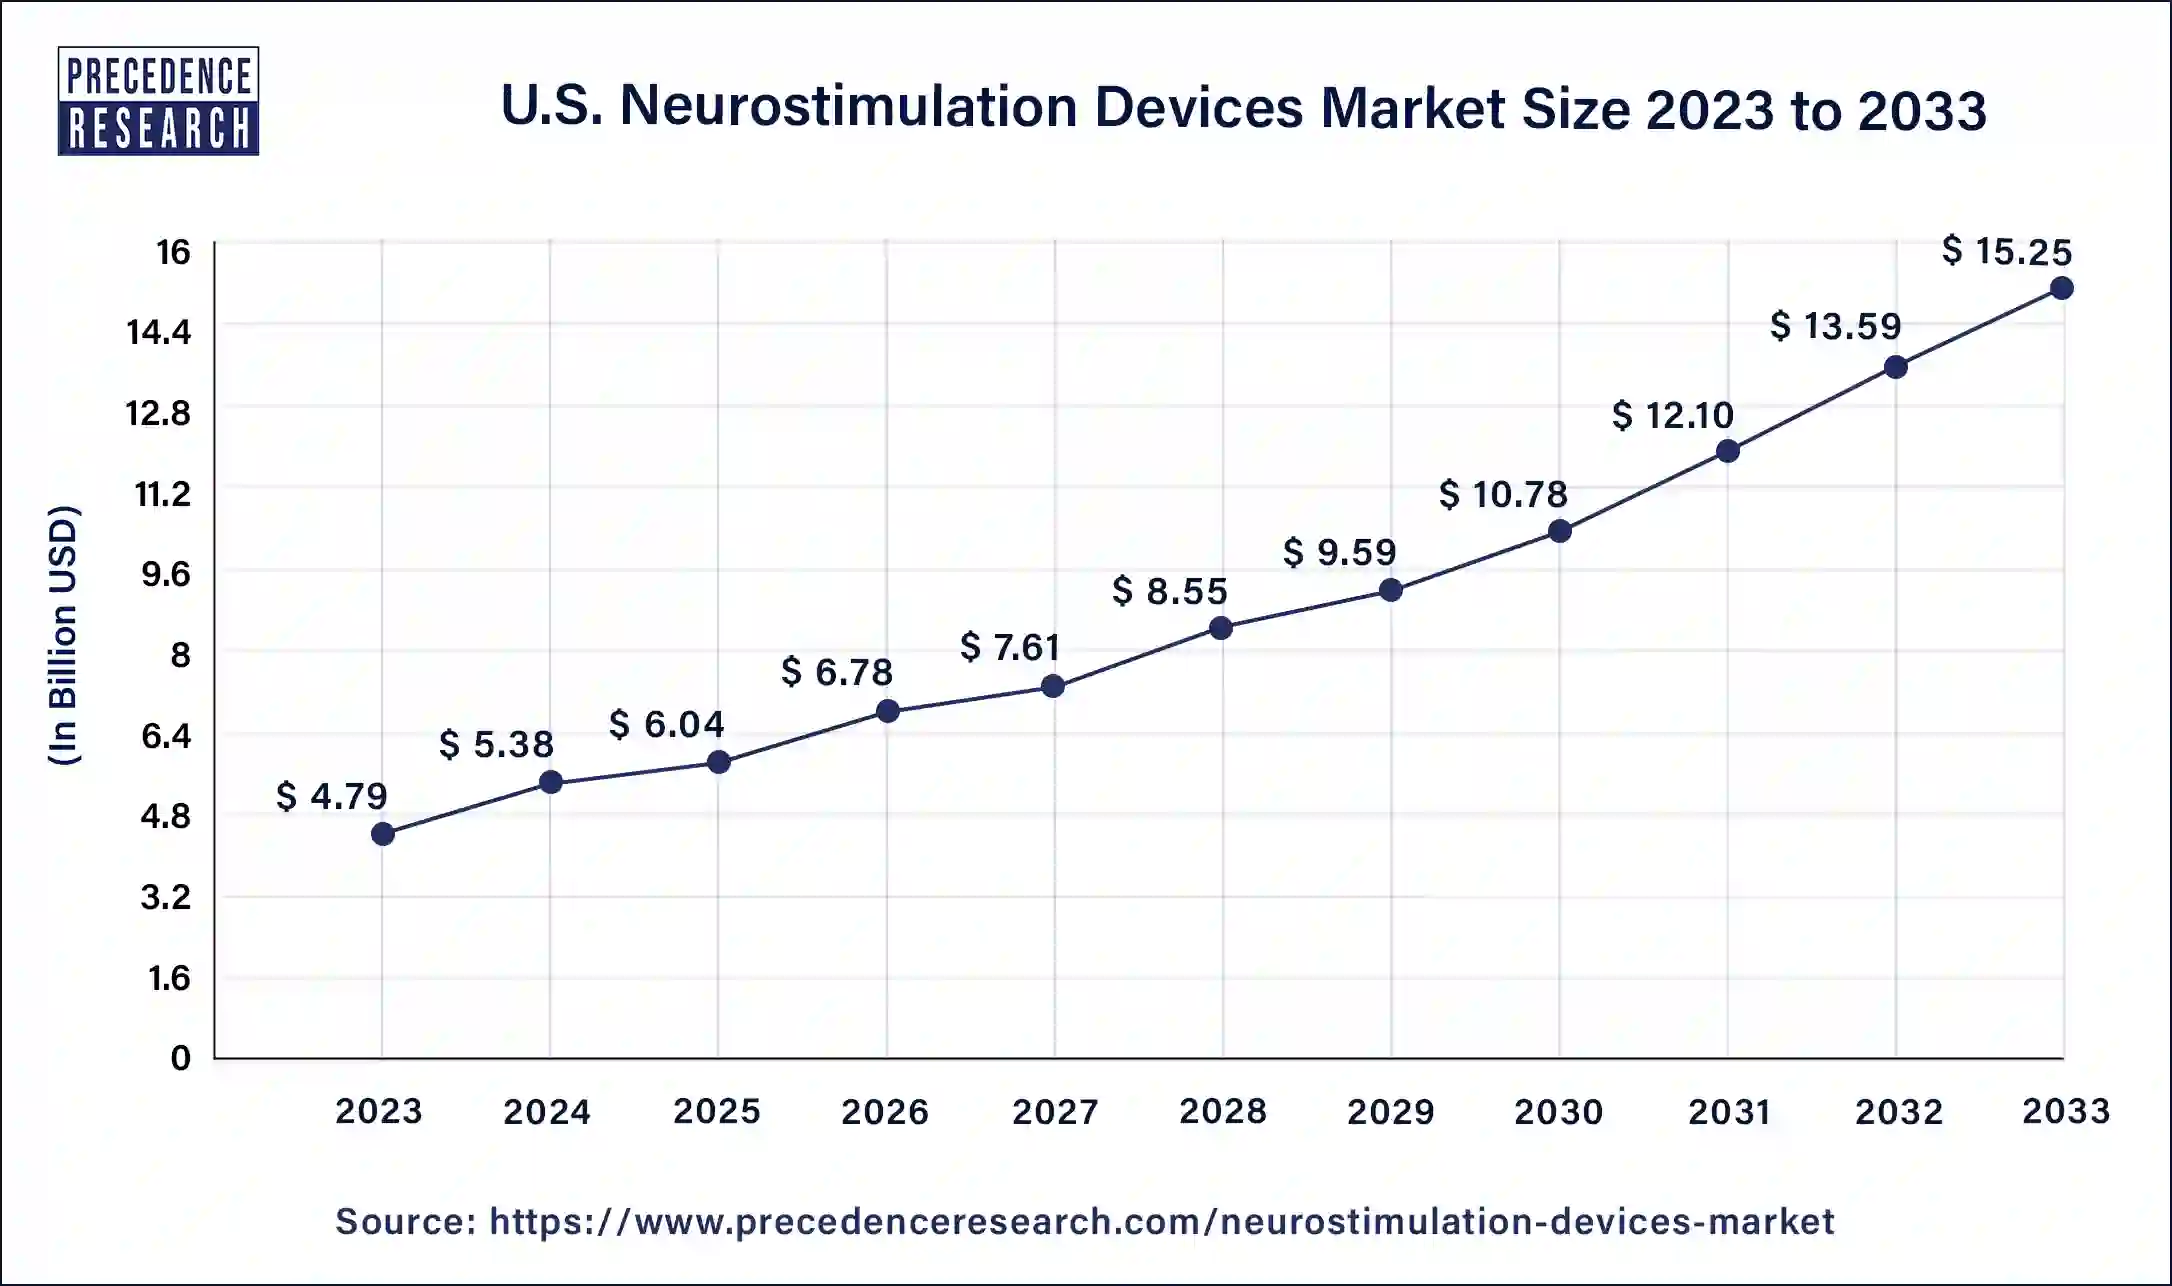 U.S. Neurostimulation Devices Market Size 2024 to 2033